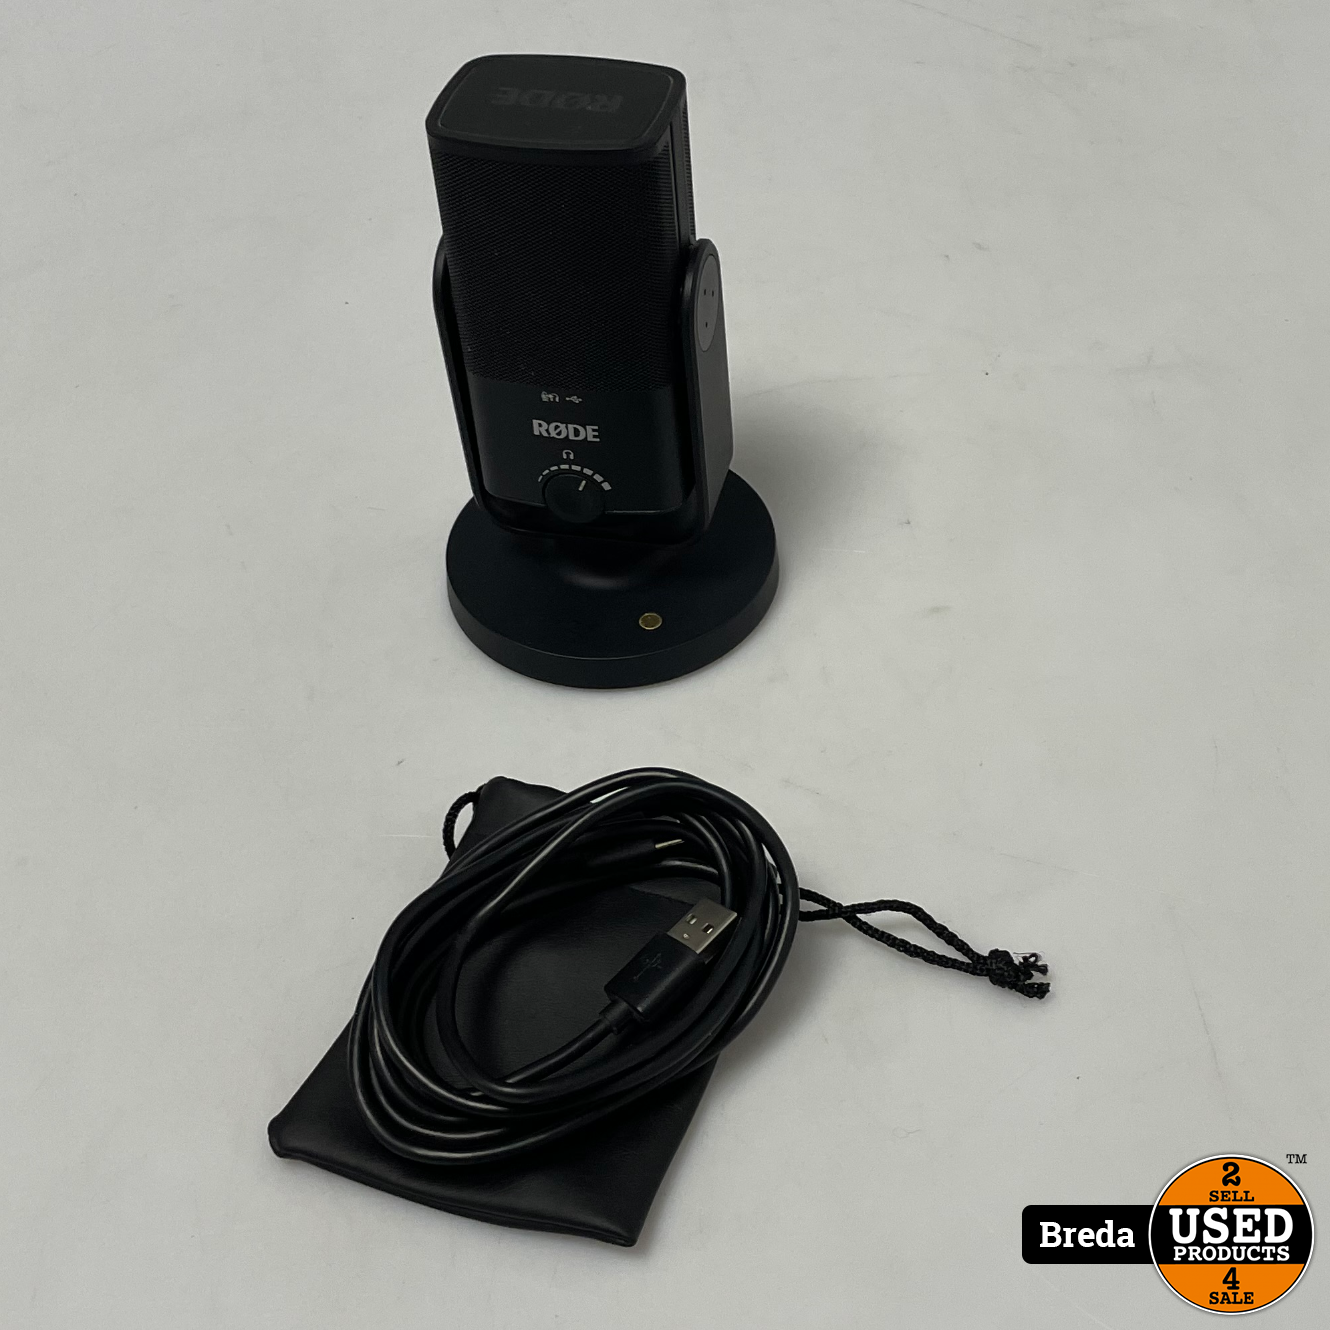 Rode NT-USB mini usb microfoon Met - Used Products